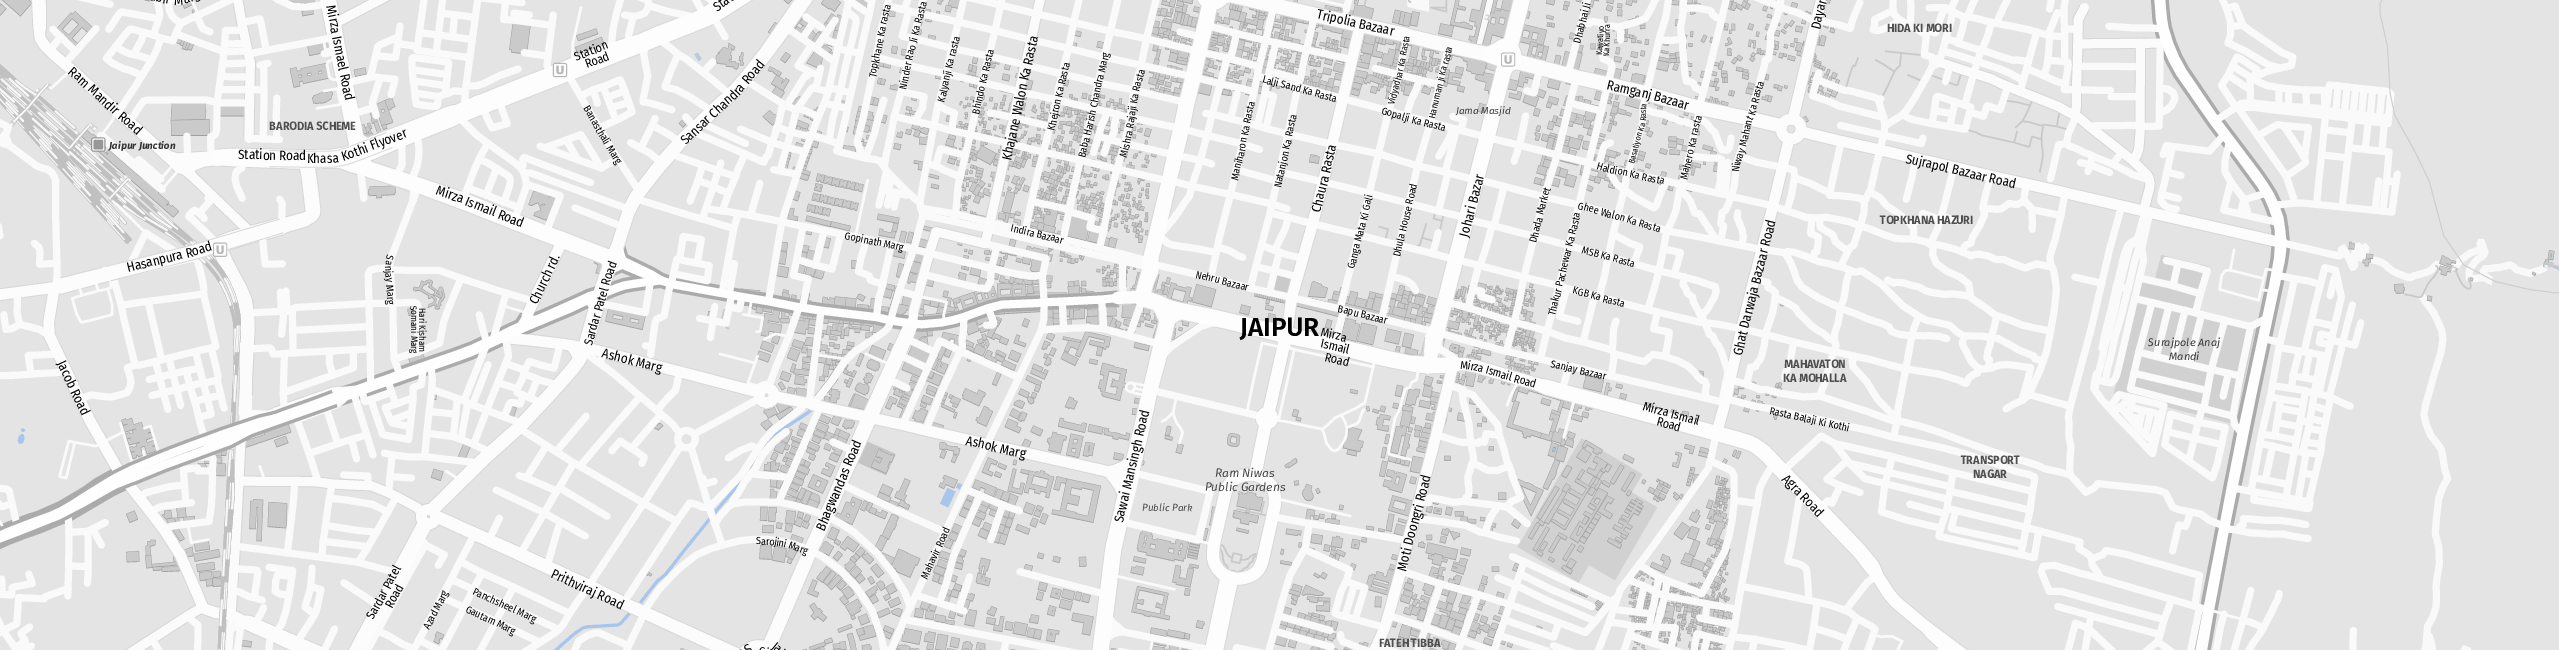 Stadtplan Jaipur zum Downloaden.